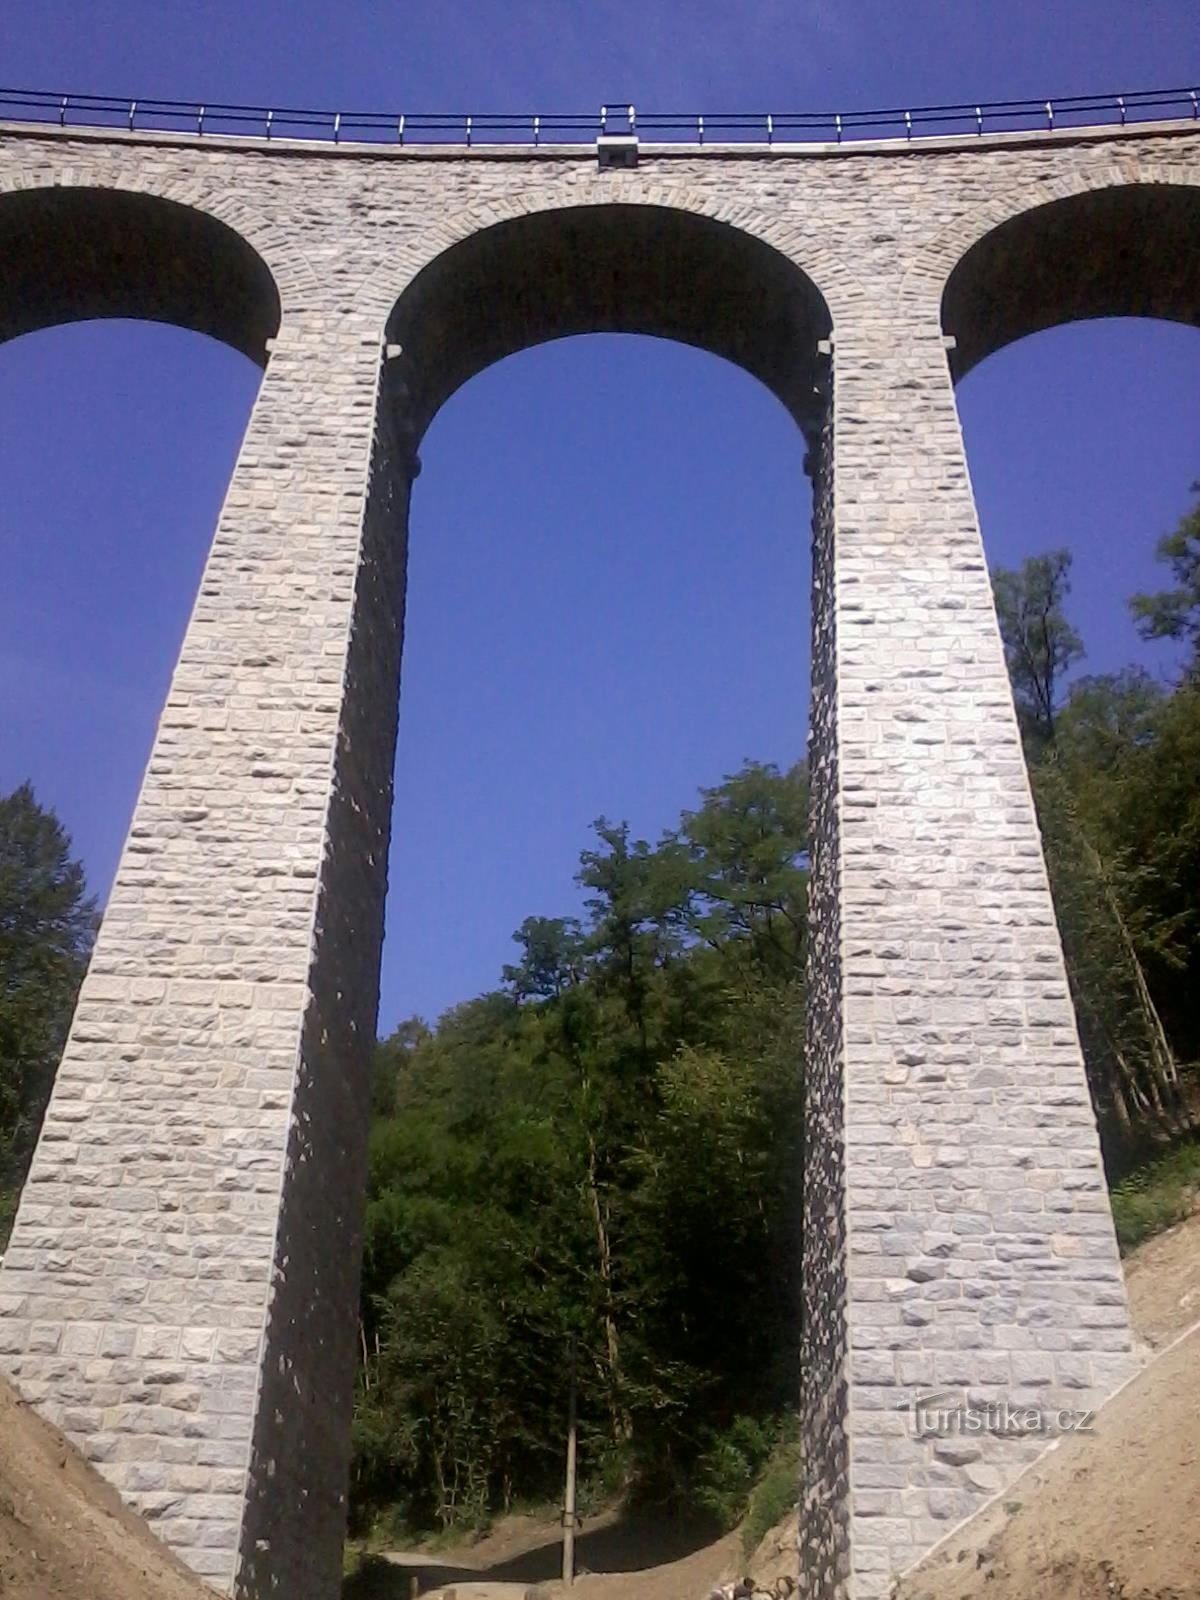 Viaduct on Žampach